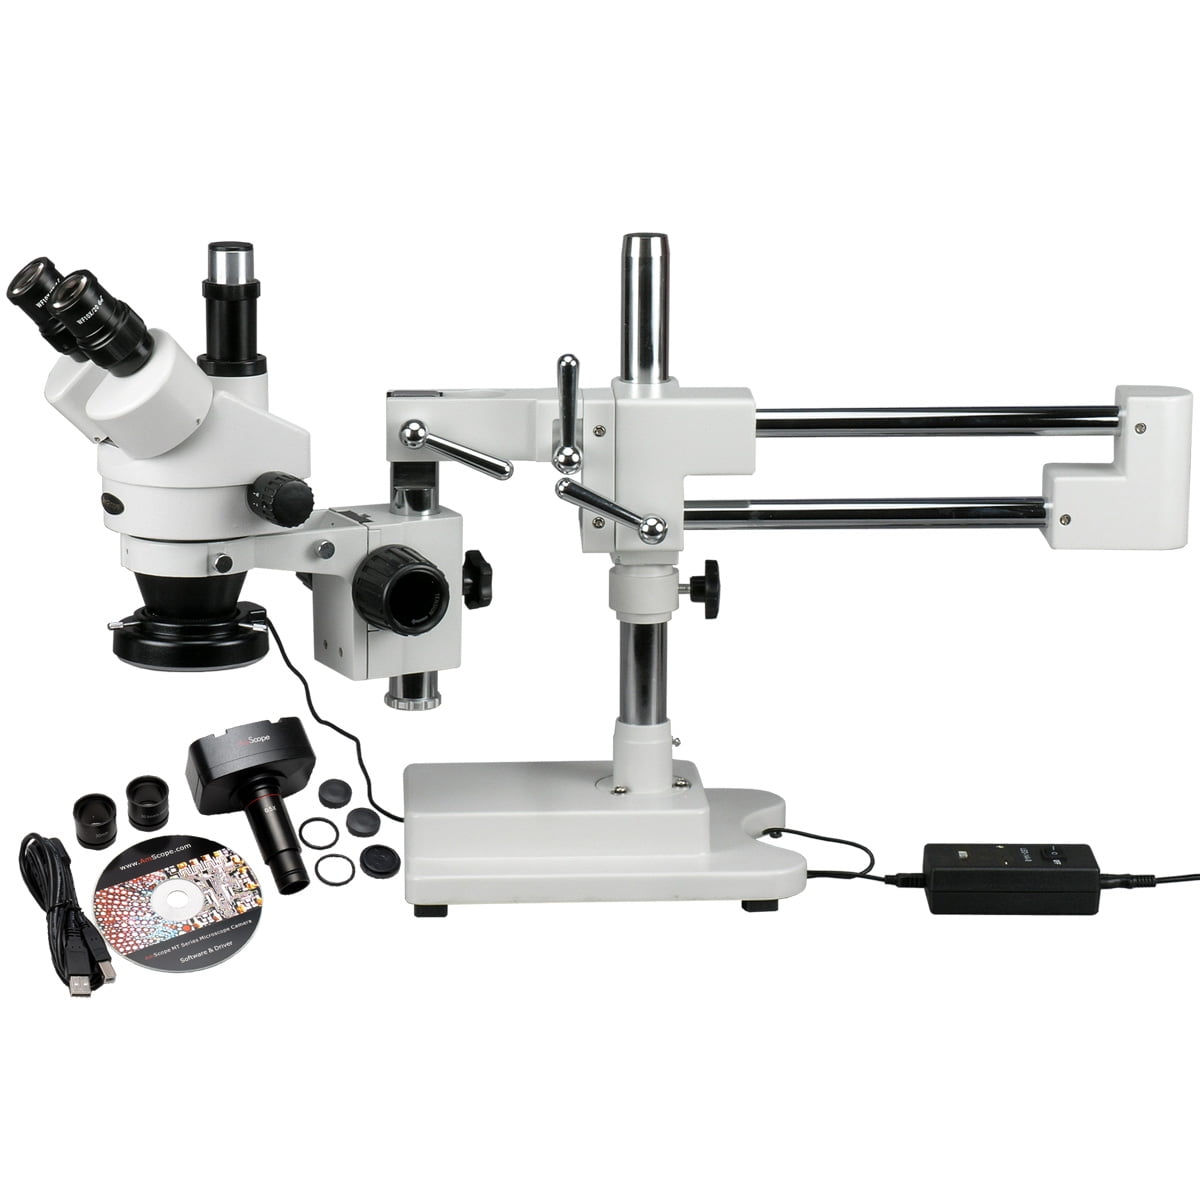 3.5X-90X Narrow Stand Zoom Stereo Microscope+144 LED Ring Light+1.3MP USB Camera 